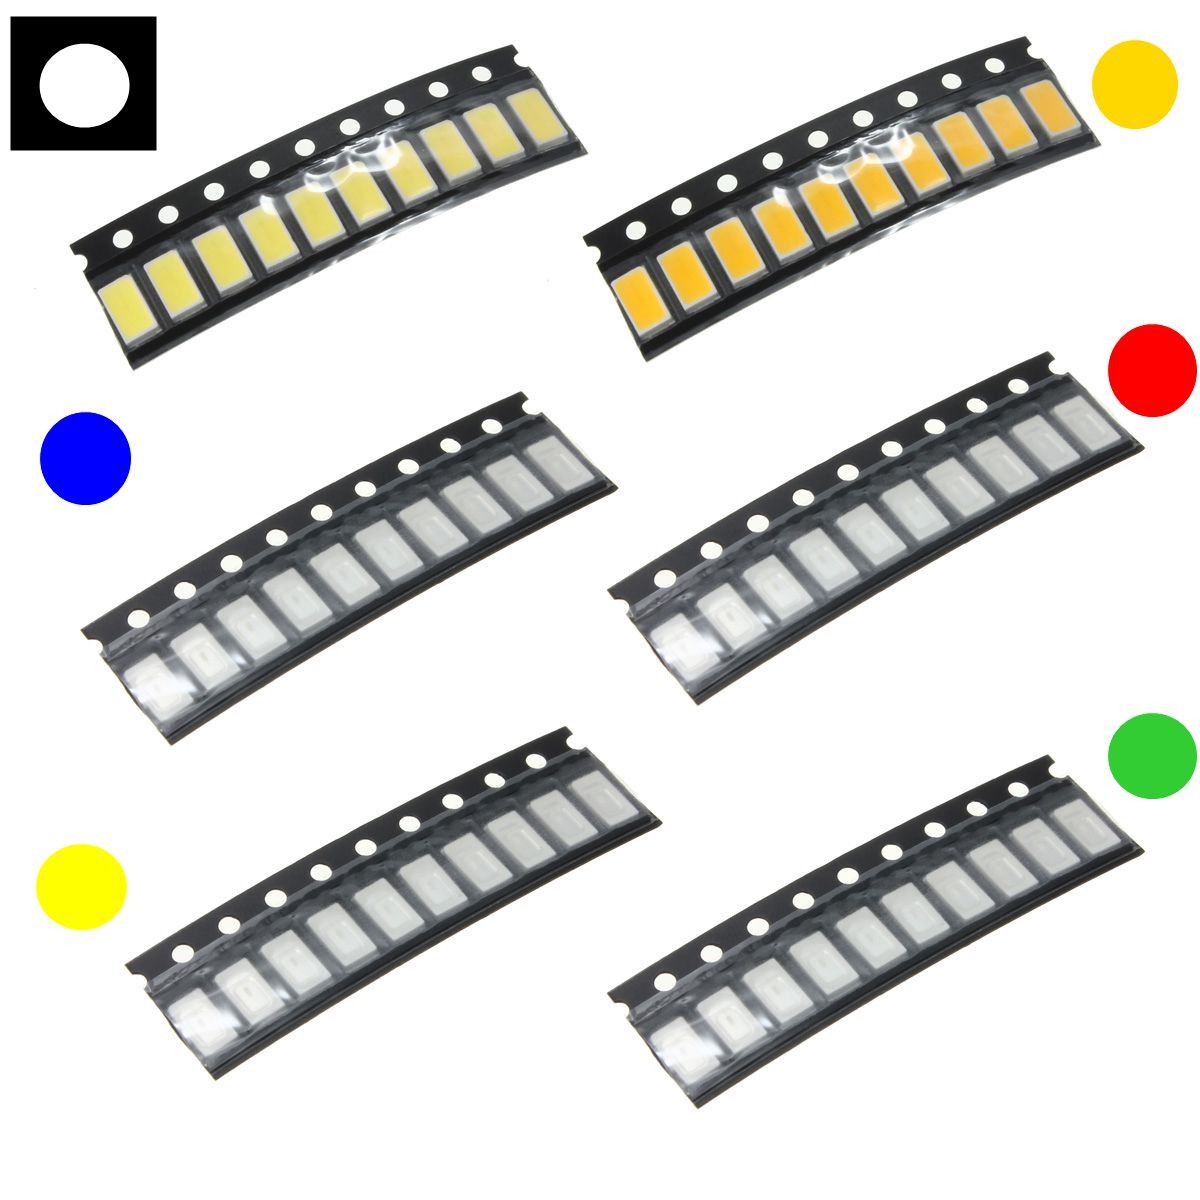 10-pcs-0805-Colorful-SMD-SMT-LED-Light-Lamp-Beads-For-Strip-Lights-979340